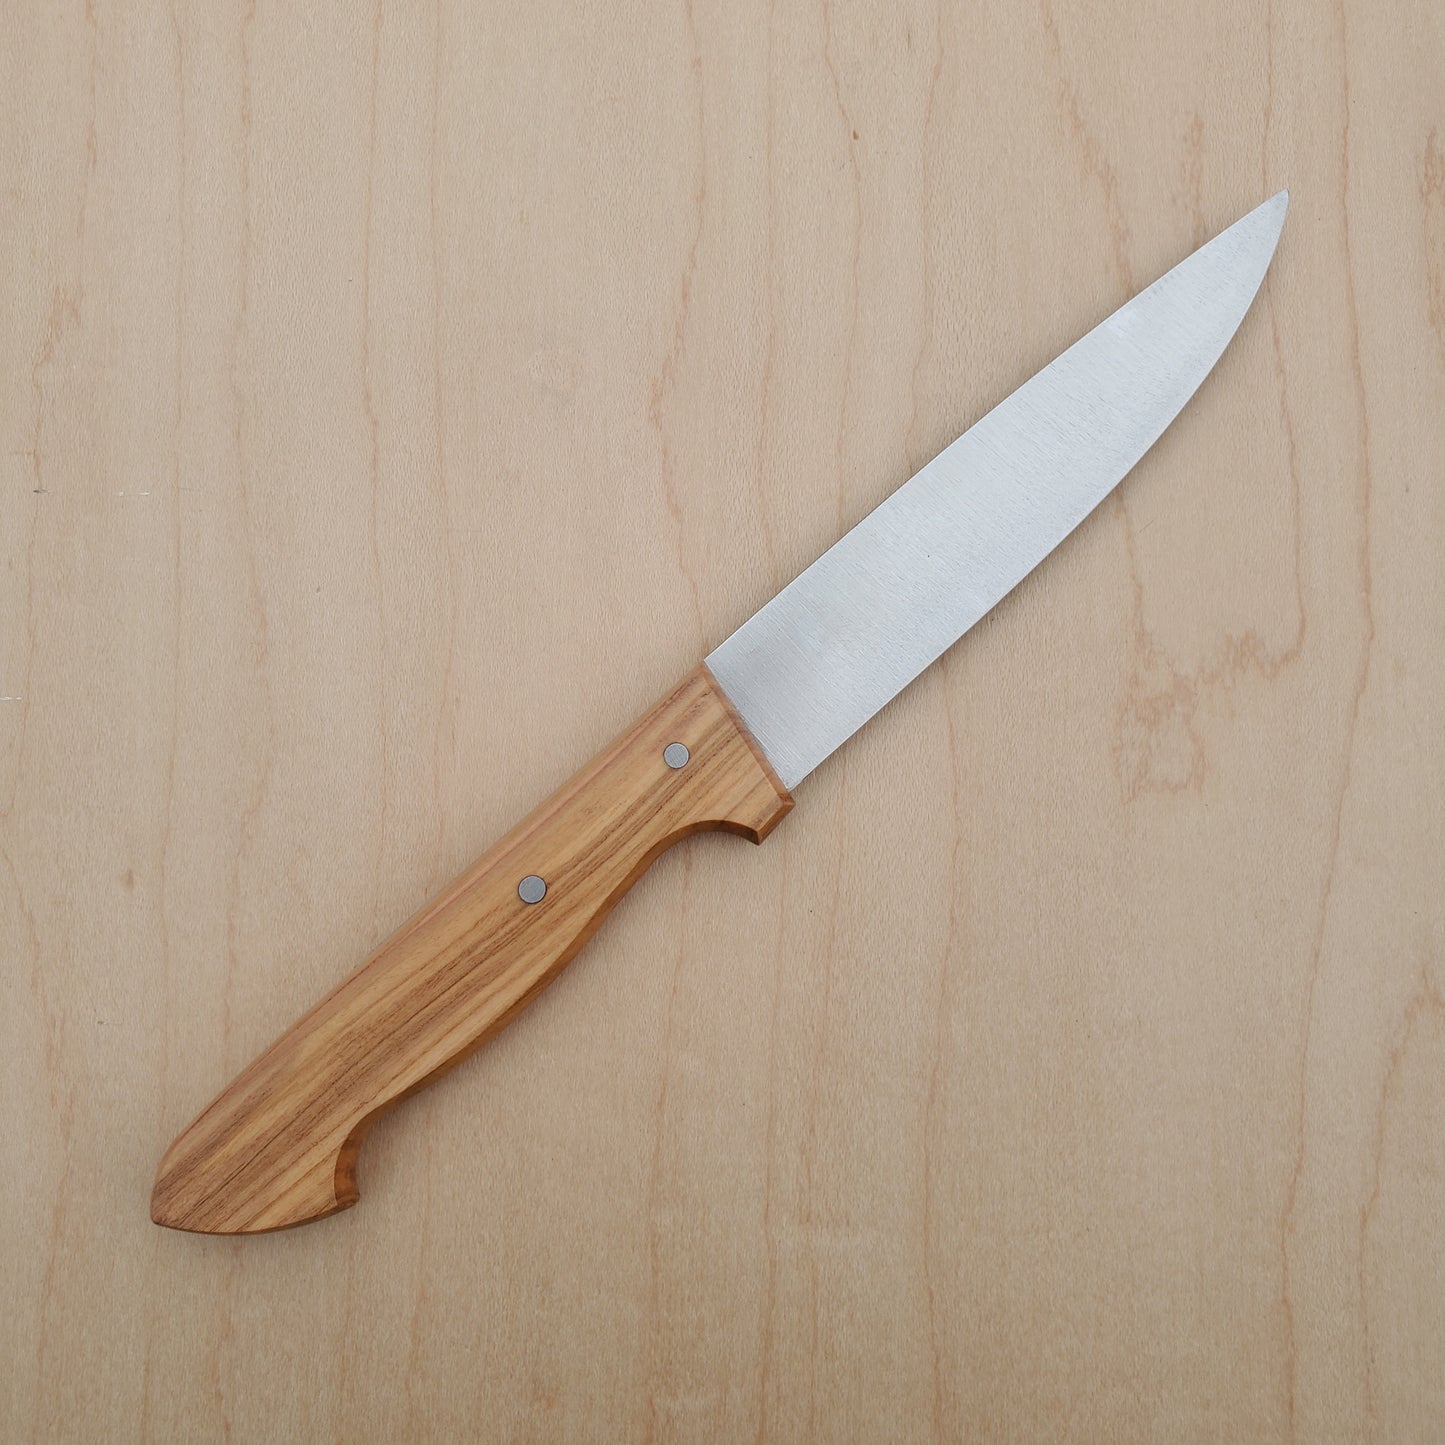 Pallares Steak Knife 4.5" - Stainless Steel - Olive